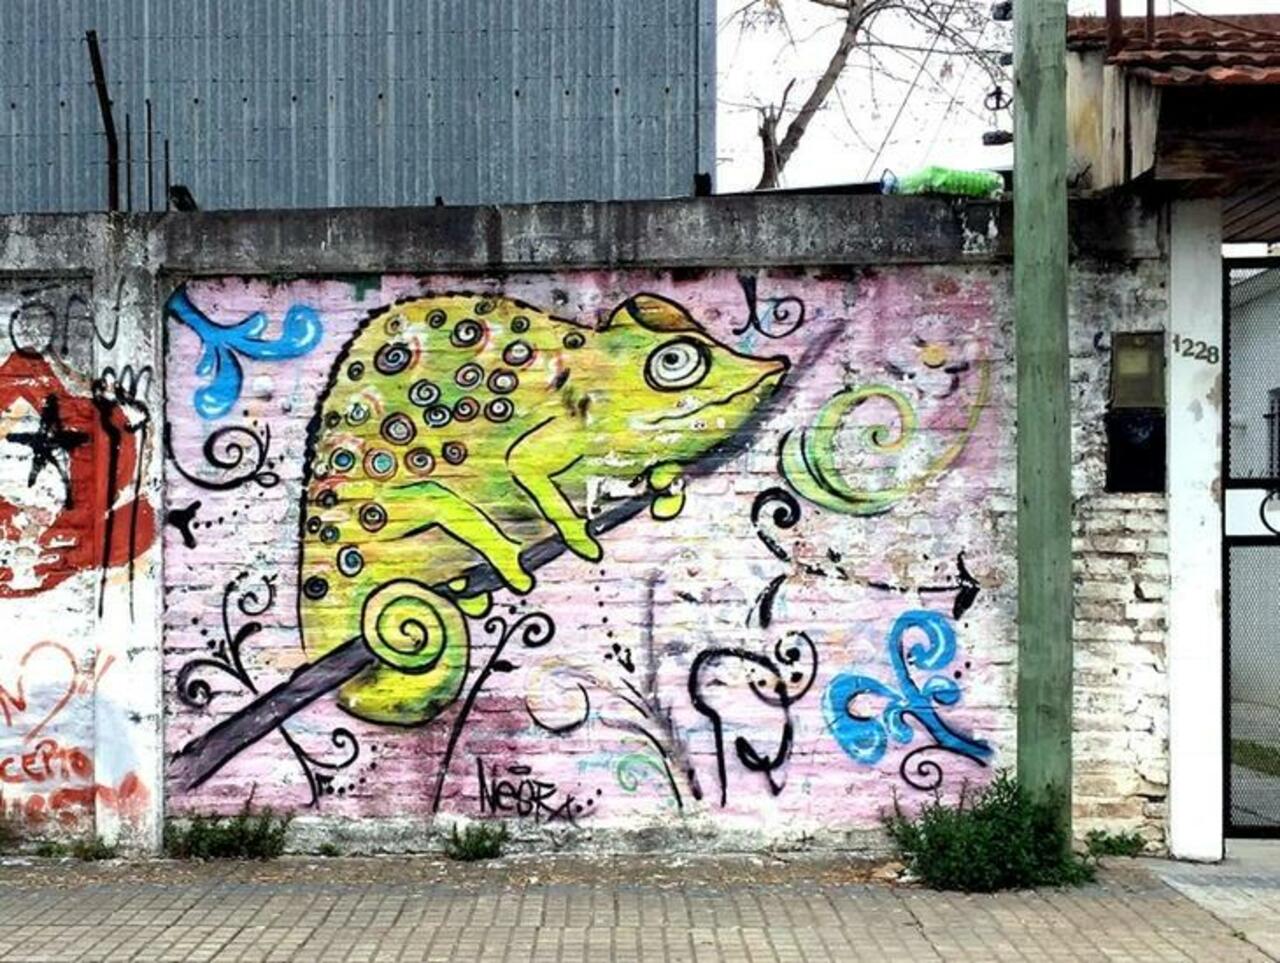 #Graffiti de hoy: << La iguana amarilla >> calles 45, 19y20, #LaPlata #Argentina #StreetArt #UrbanArt #ArteUrbano http://t.co/iHtAvKb88o